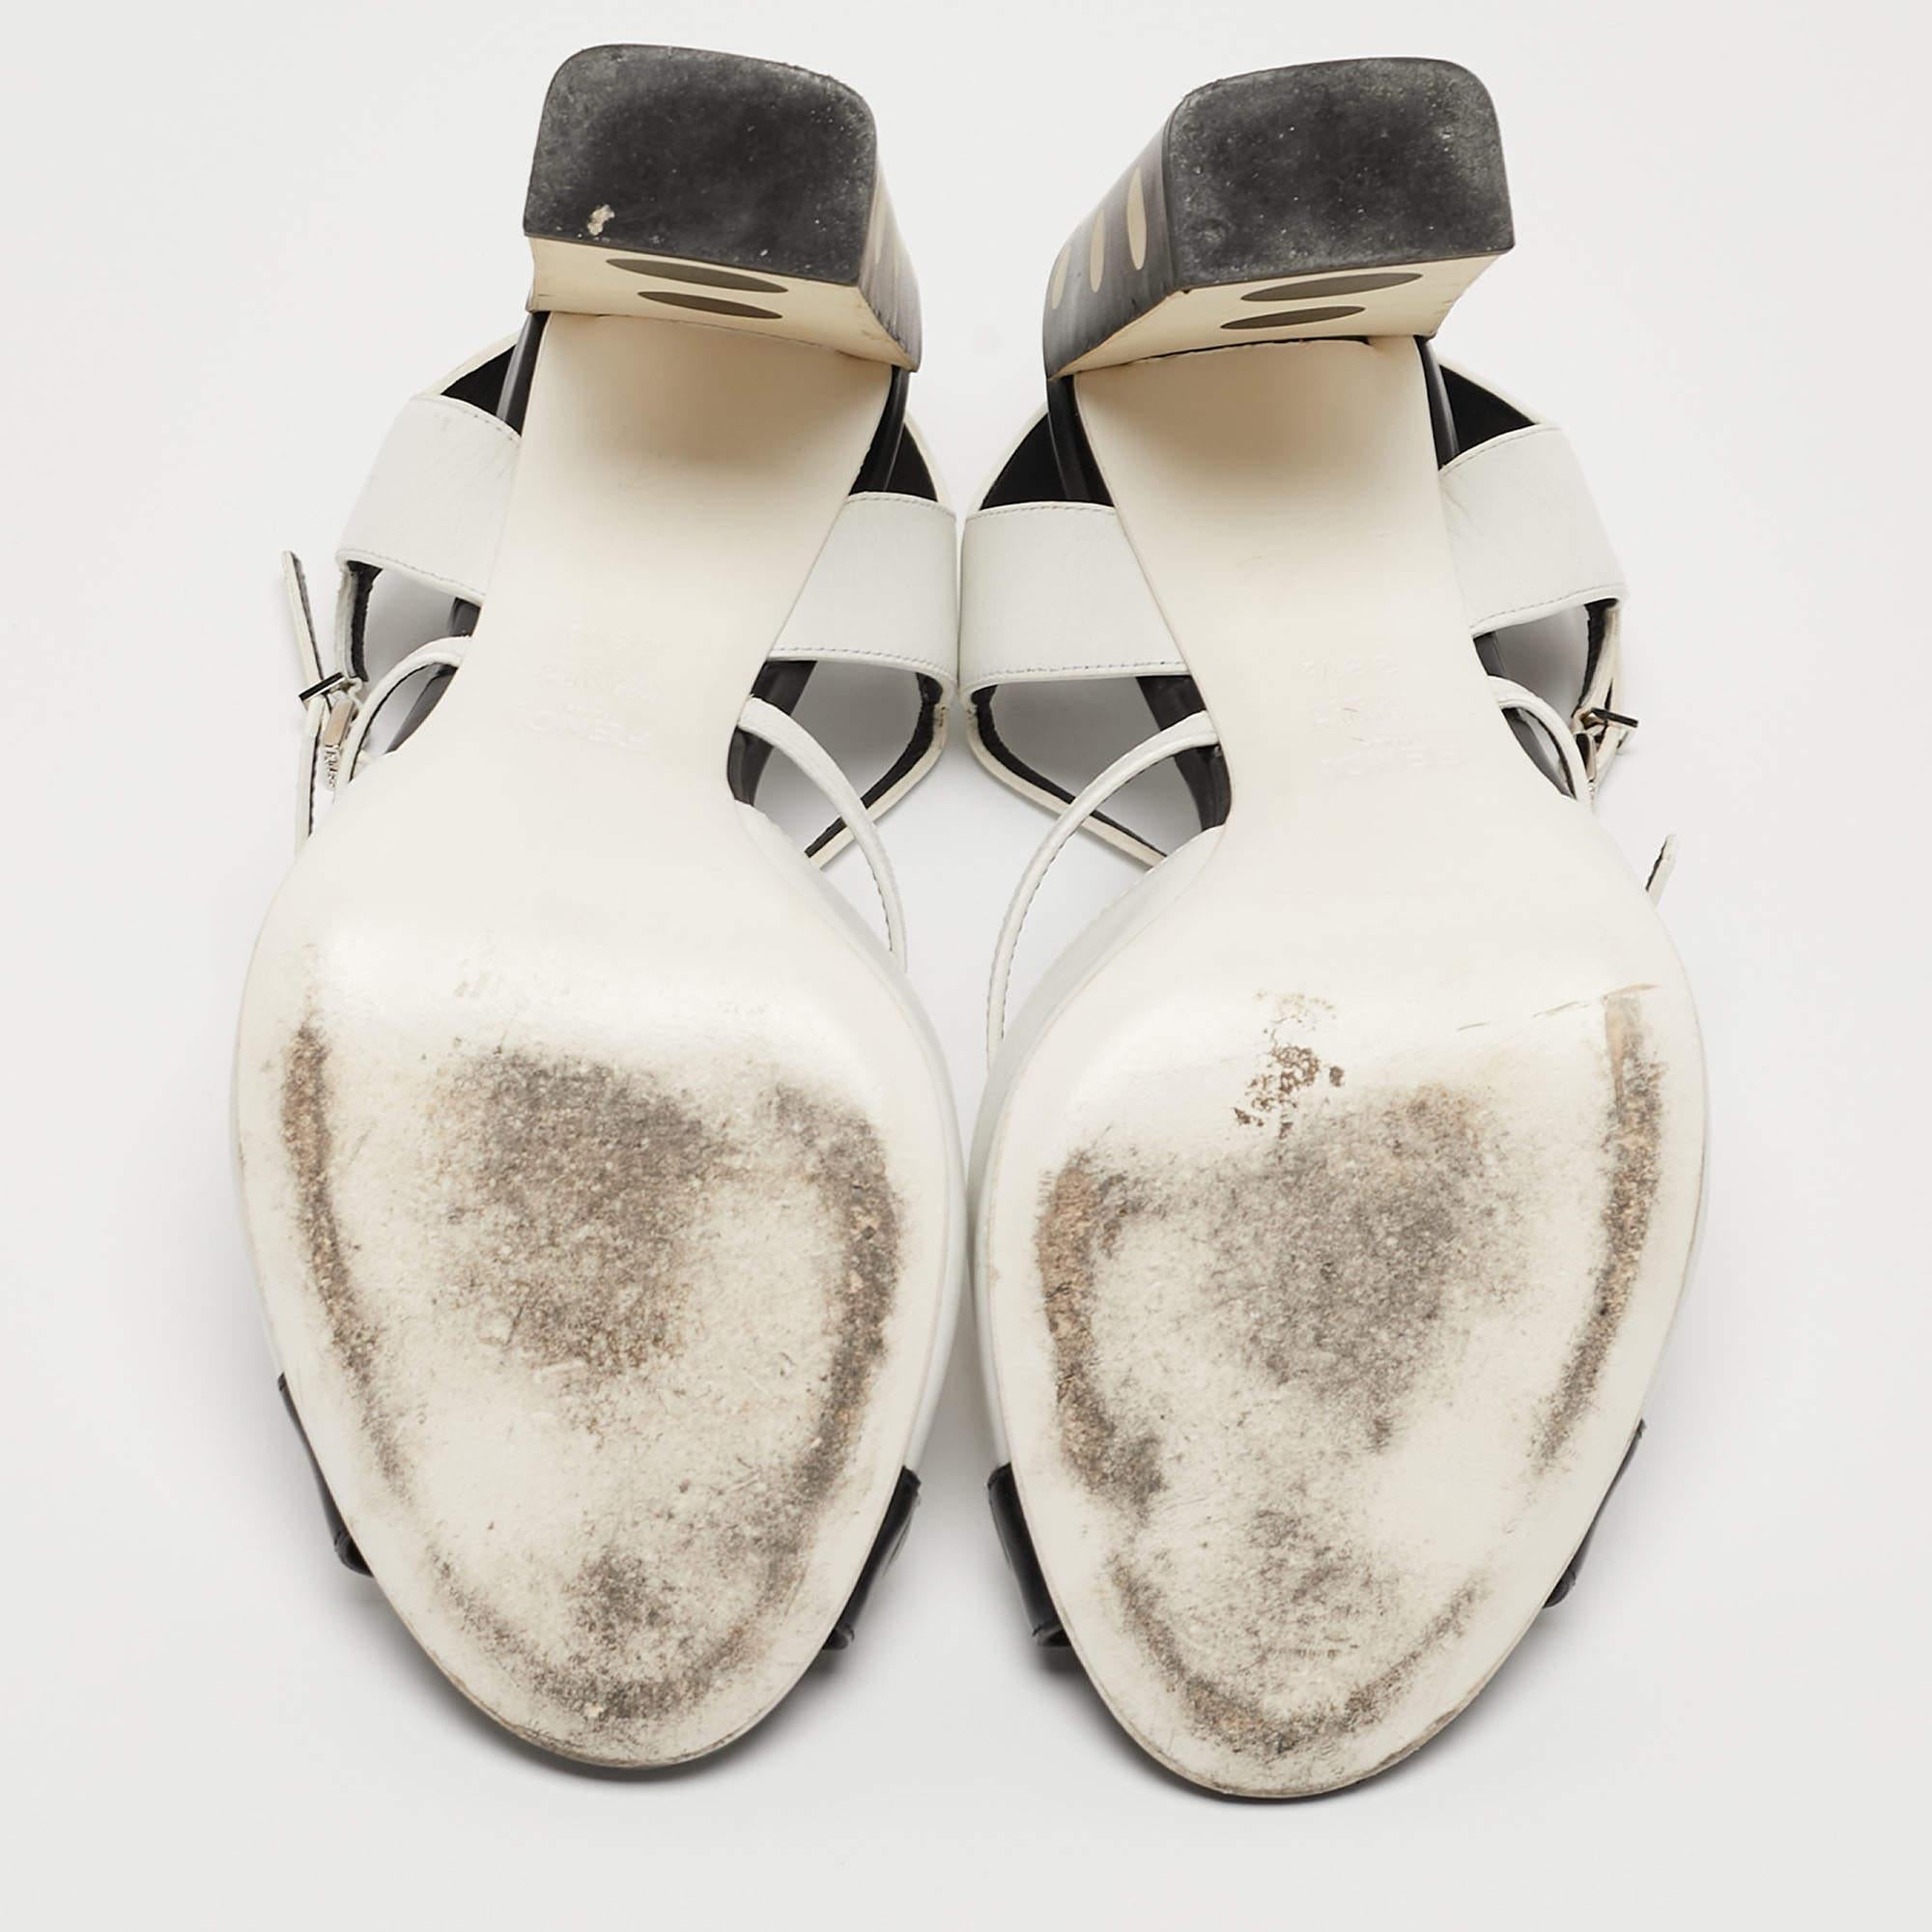 Fendi Black/White Leather Ankle Strap Sandals Size 38.5 4